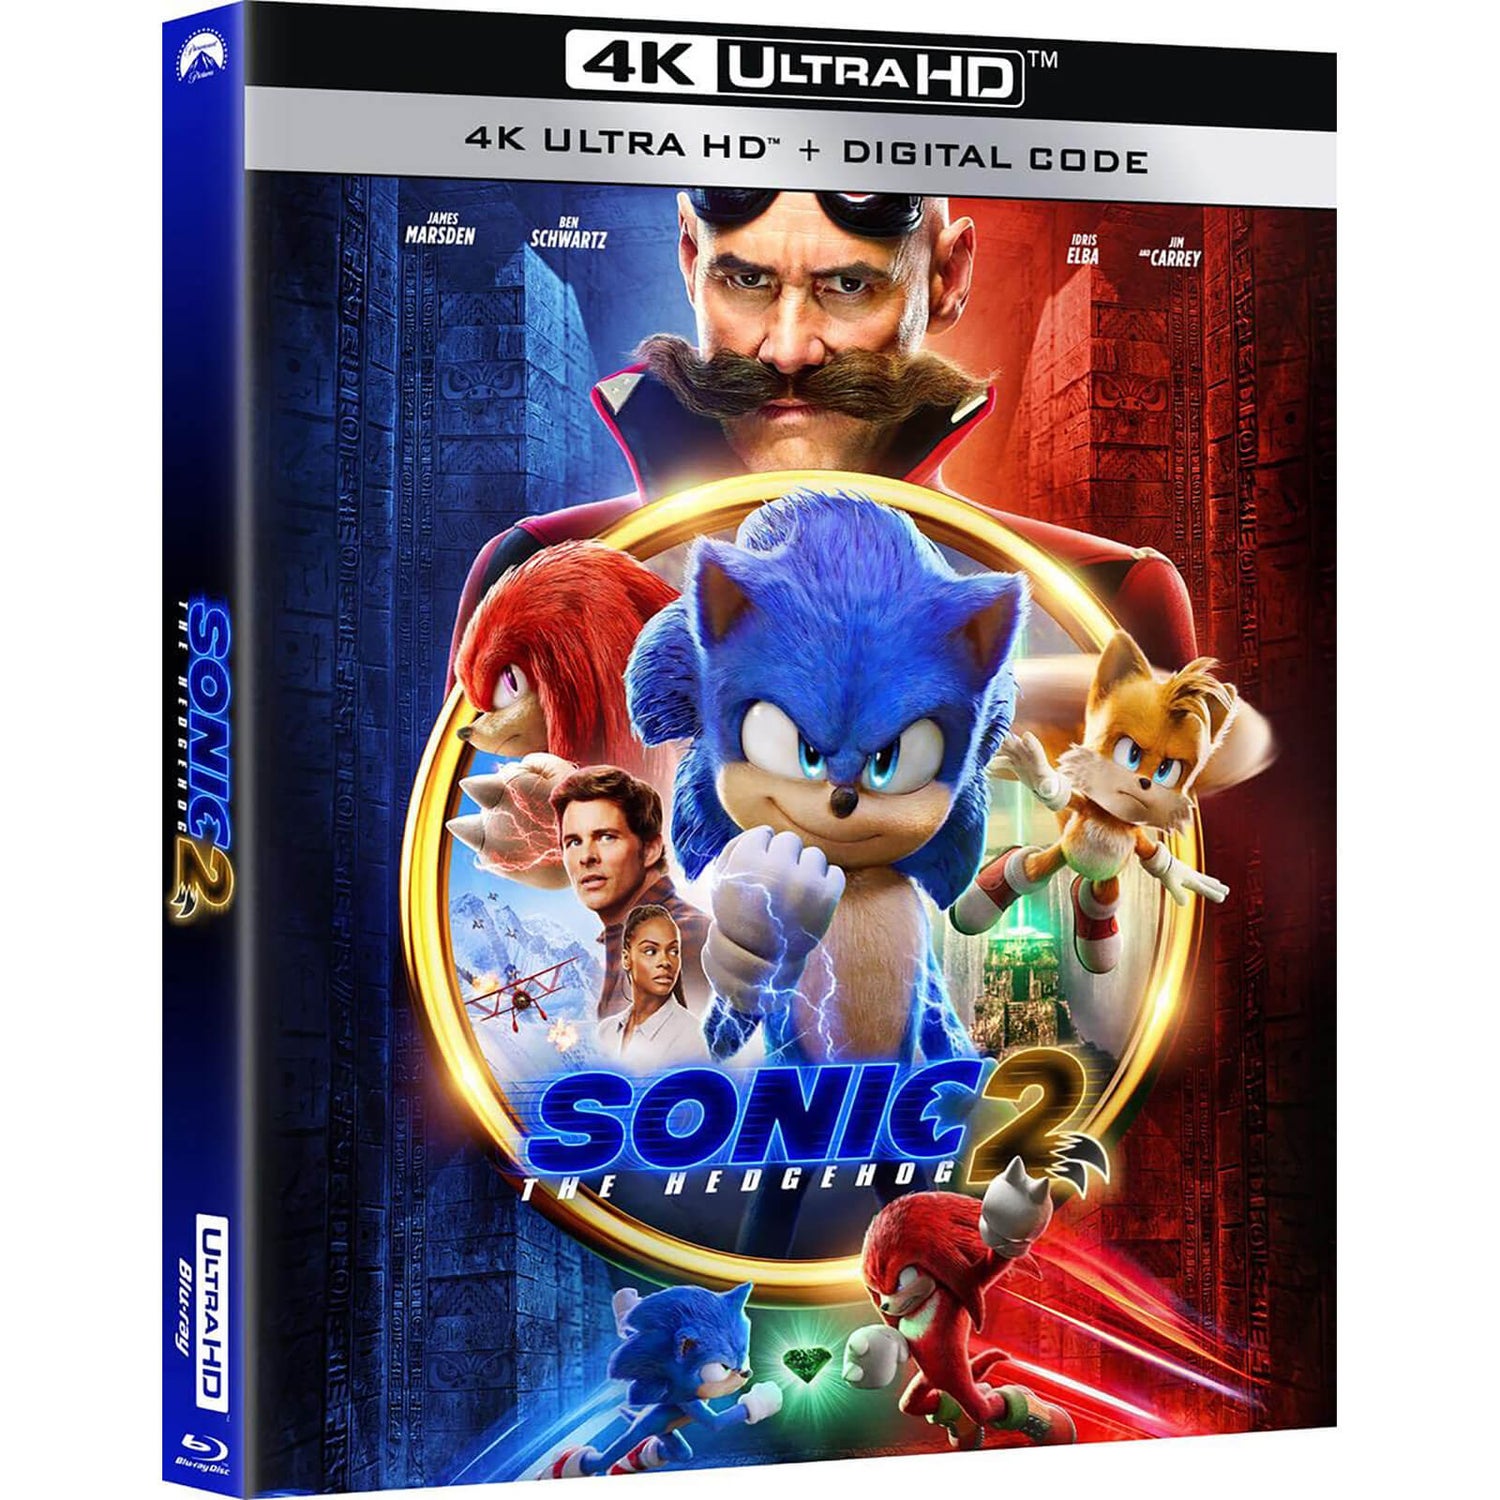 Sonic The Hedgehog 2 4K Ultra HD (Includes Digital)